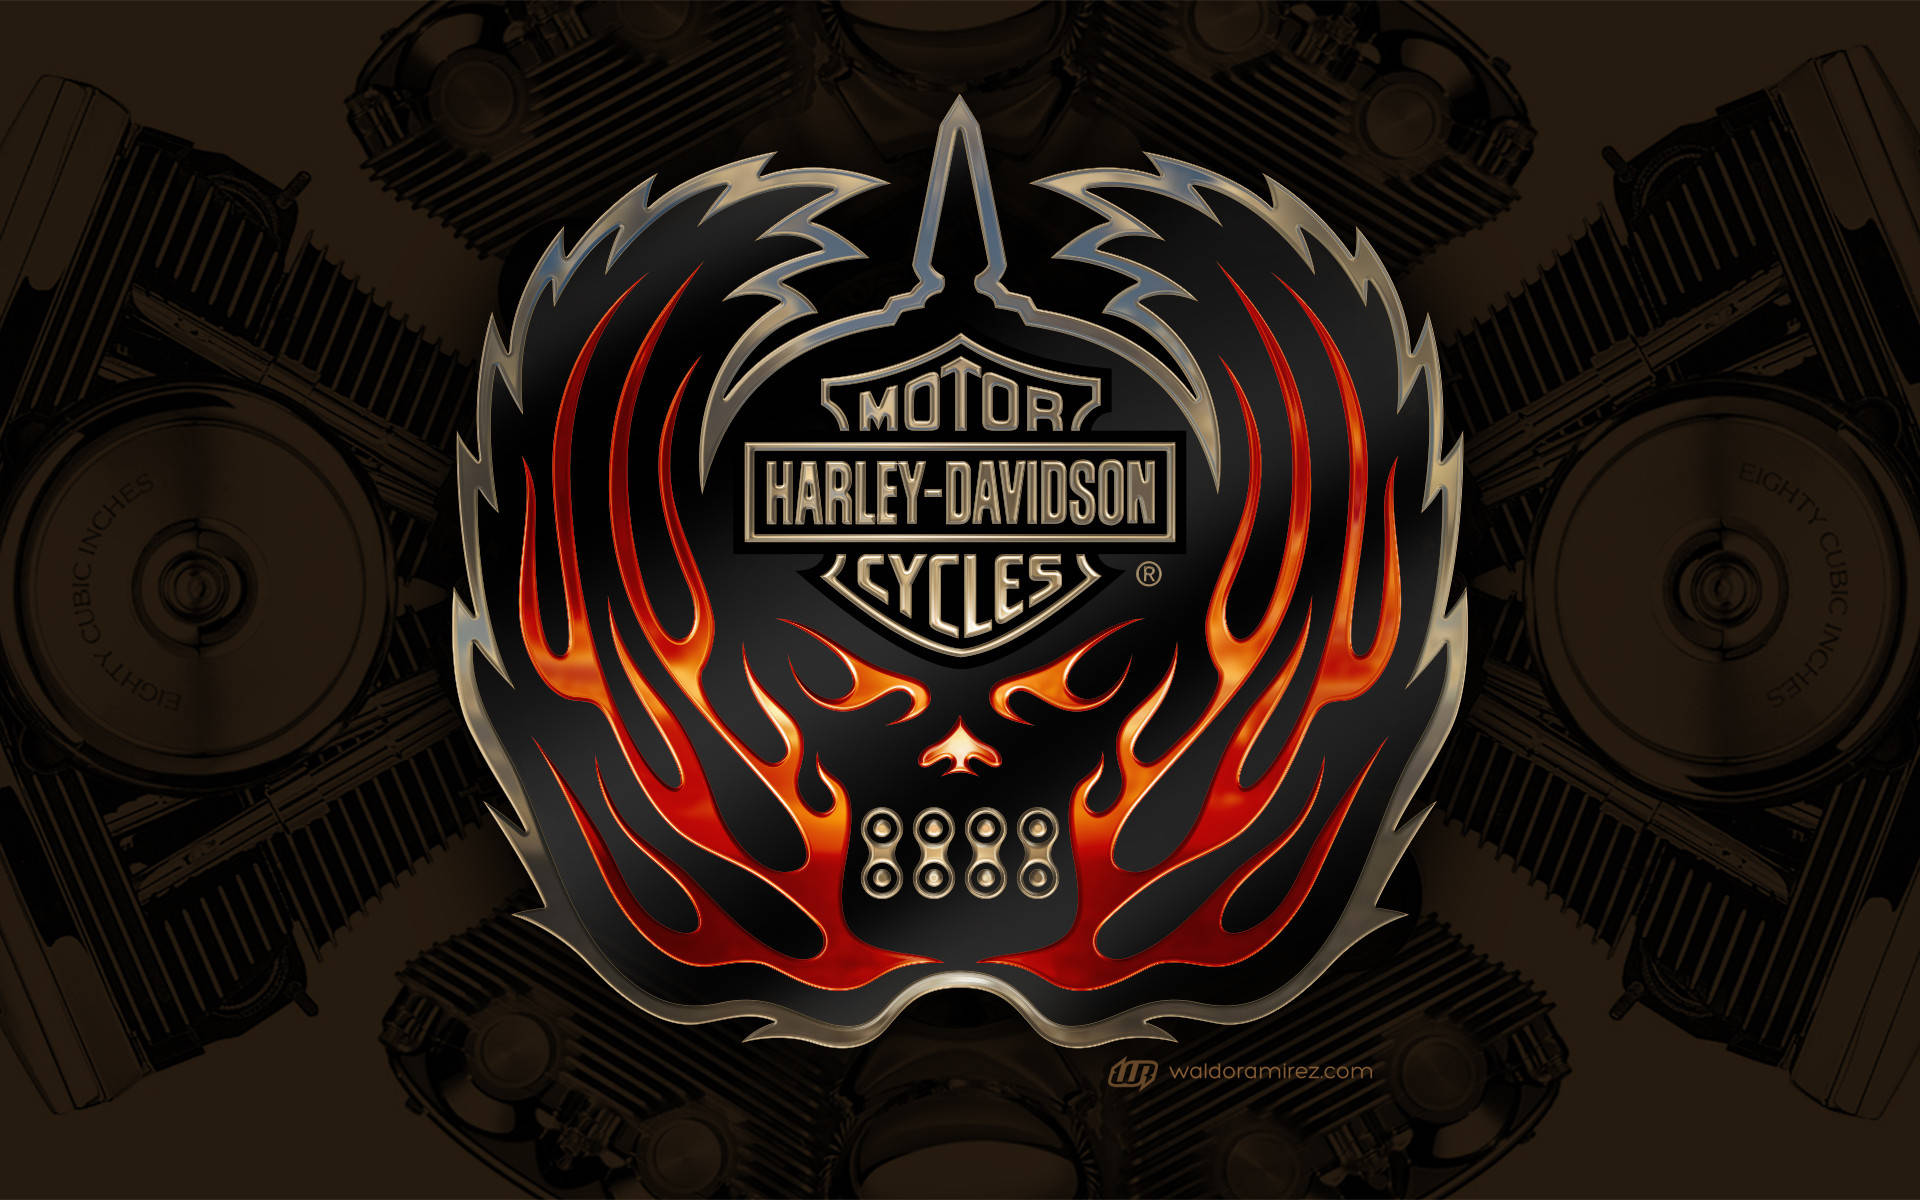 Harley Davidson Logo Pictures